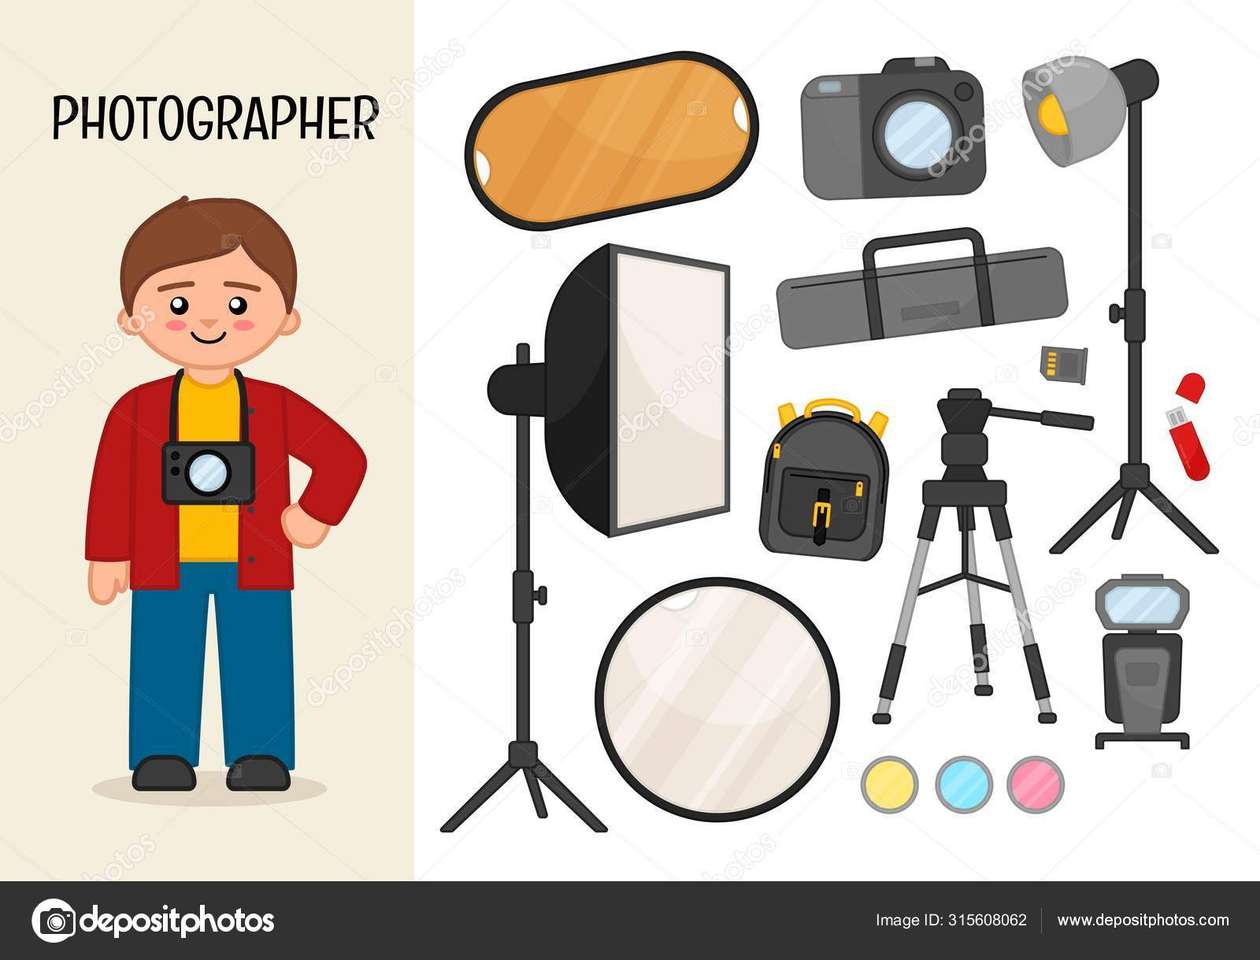 Photographer online puzzle